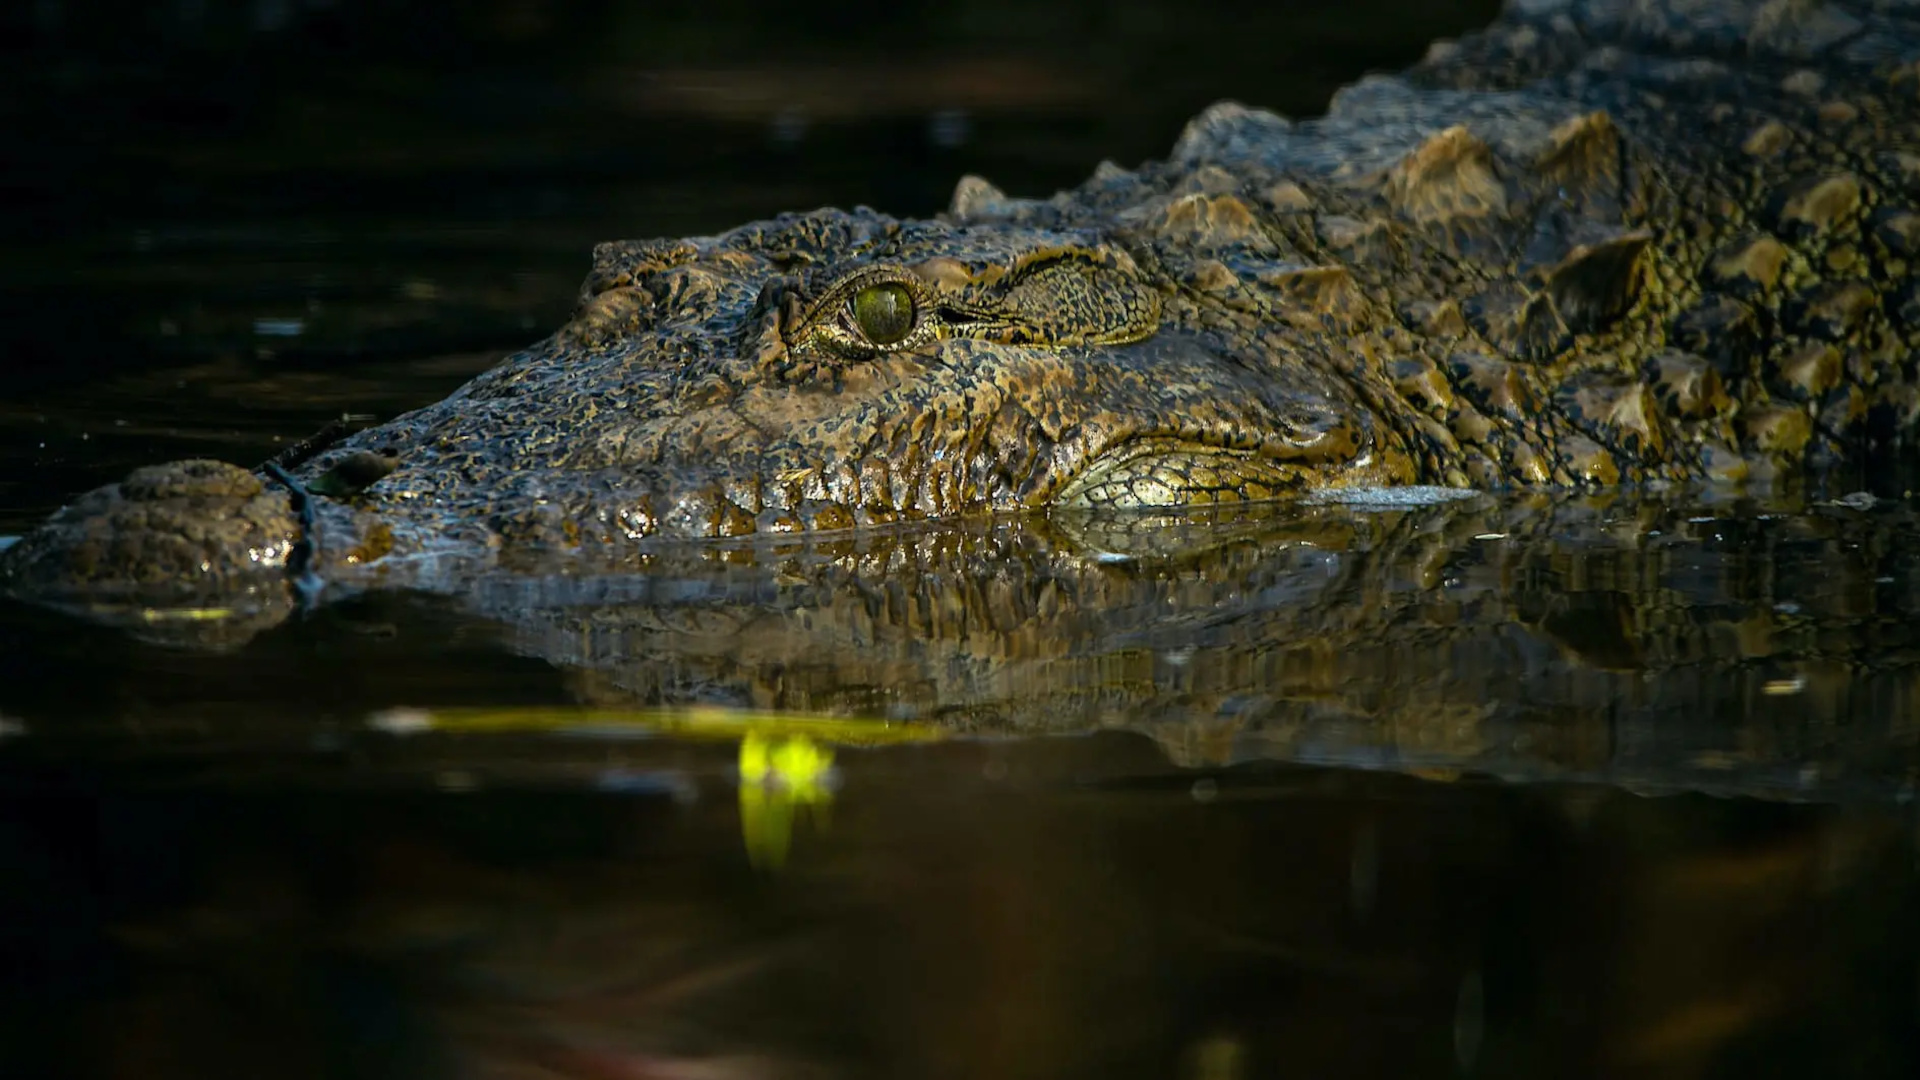 A Saltwater Crocodile in the Karnataka’s Ranganathittu Bird Sanctuary in India